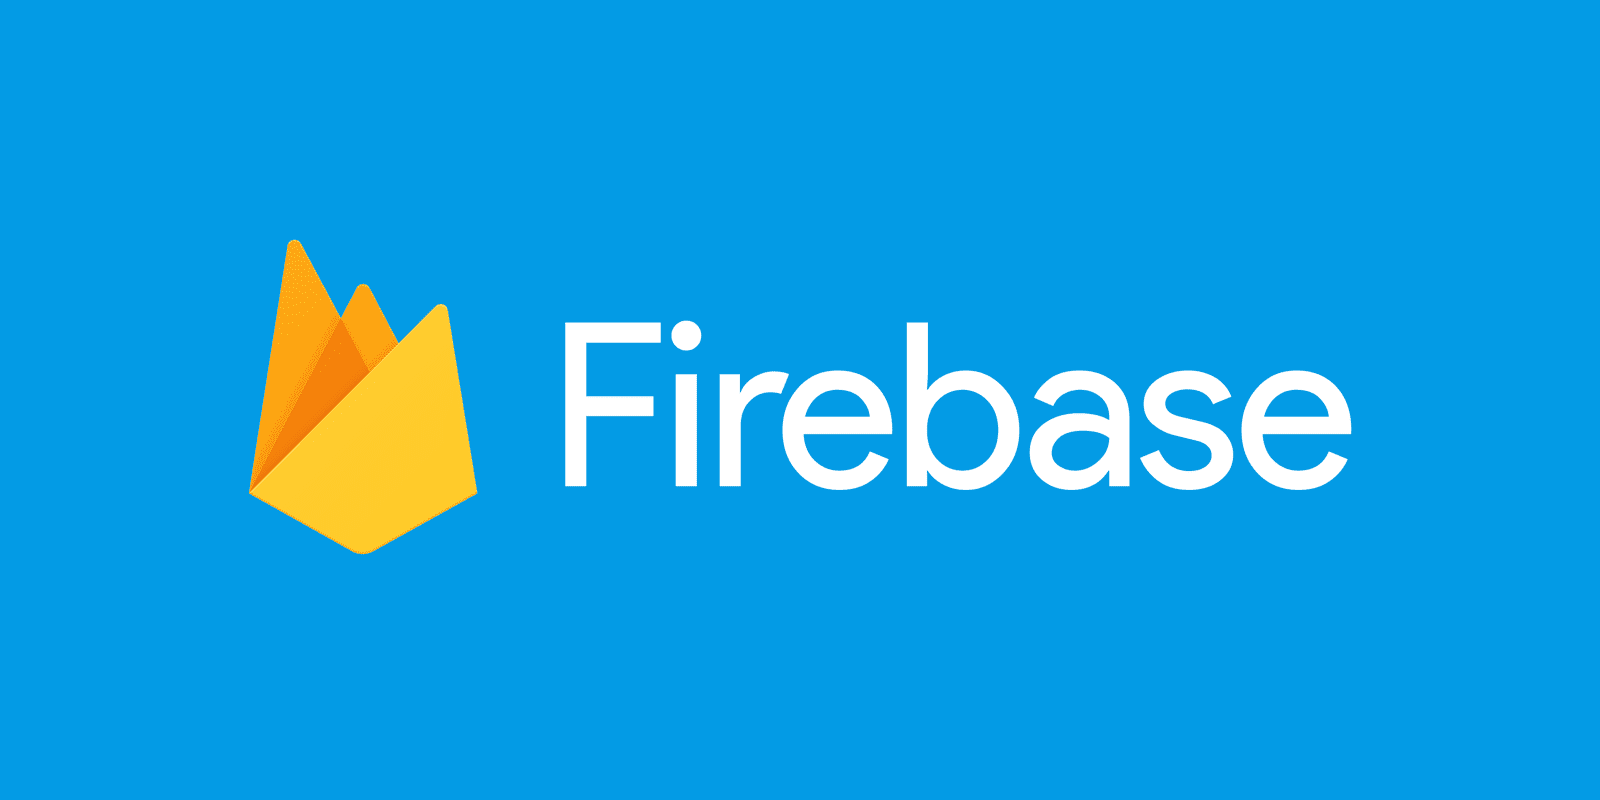 How to setup Google Firebase on your application